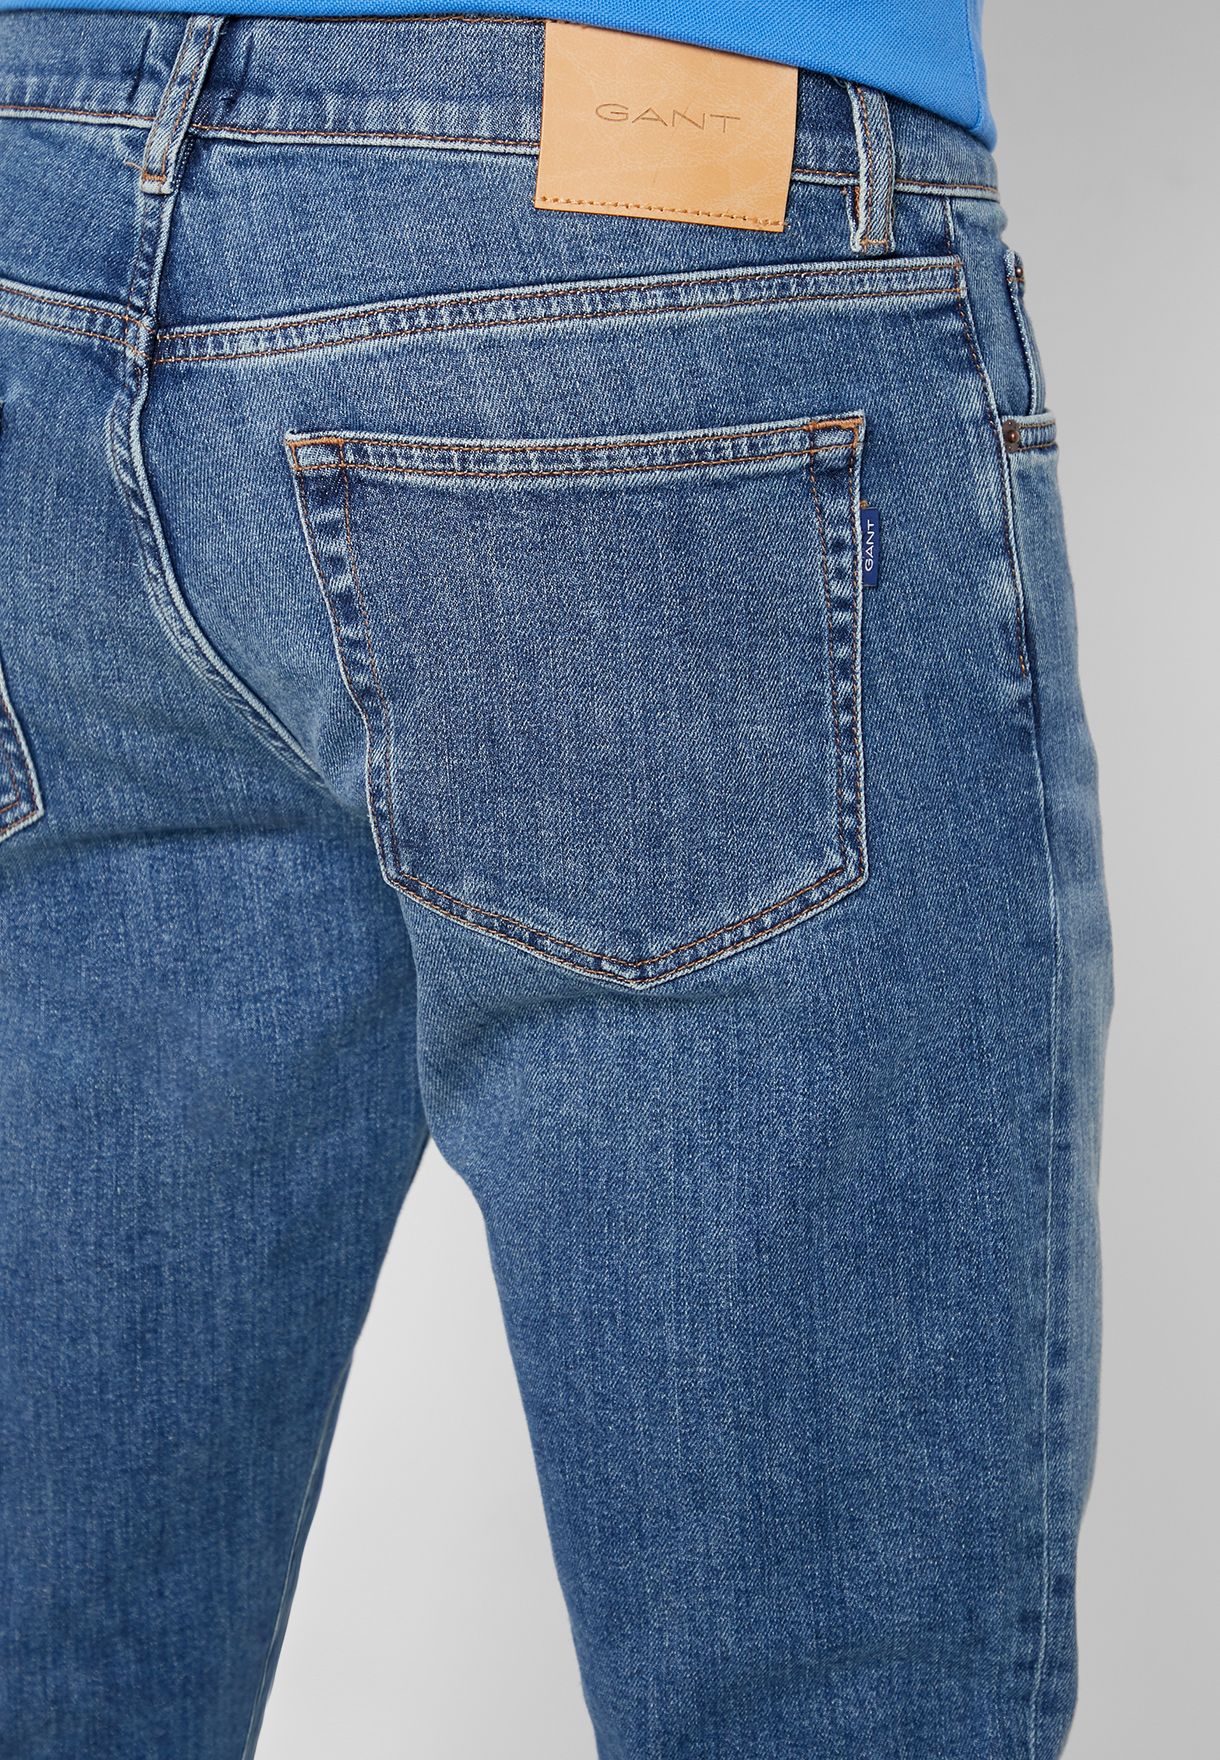 hoesten reputatie Rudyard Kipling Buy Gant blue Mid Wash Slim Fit Jeans for Men in MENA, Worldwide